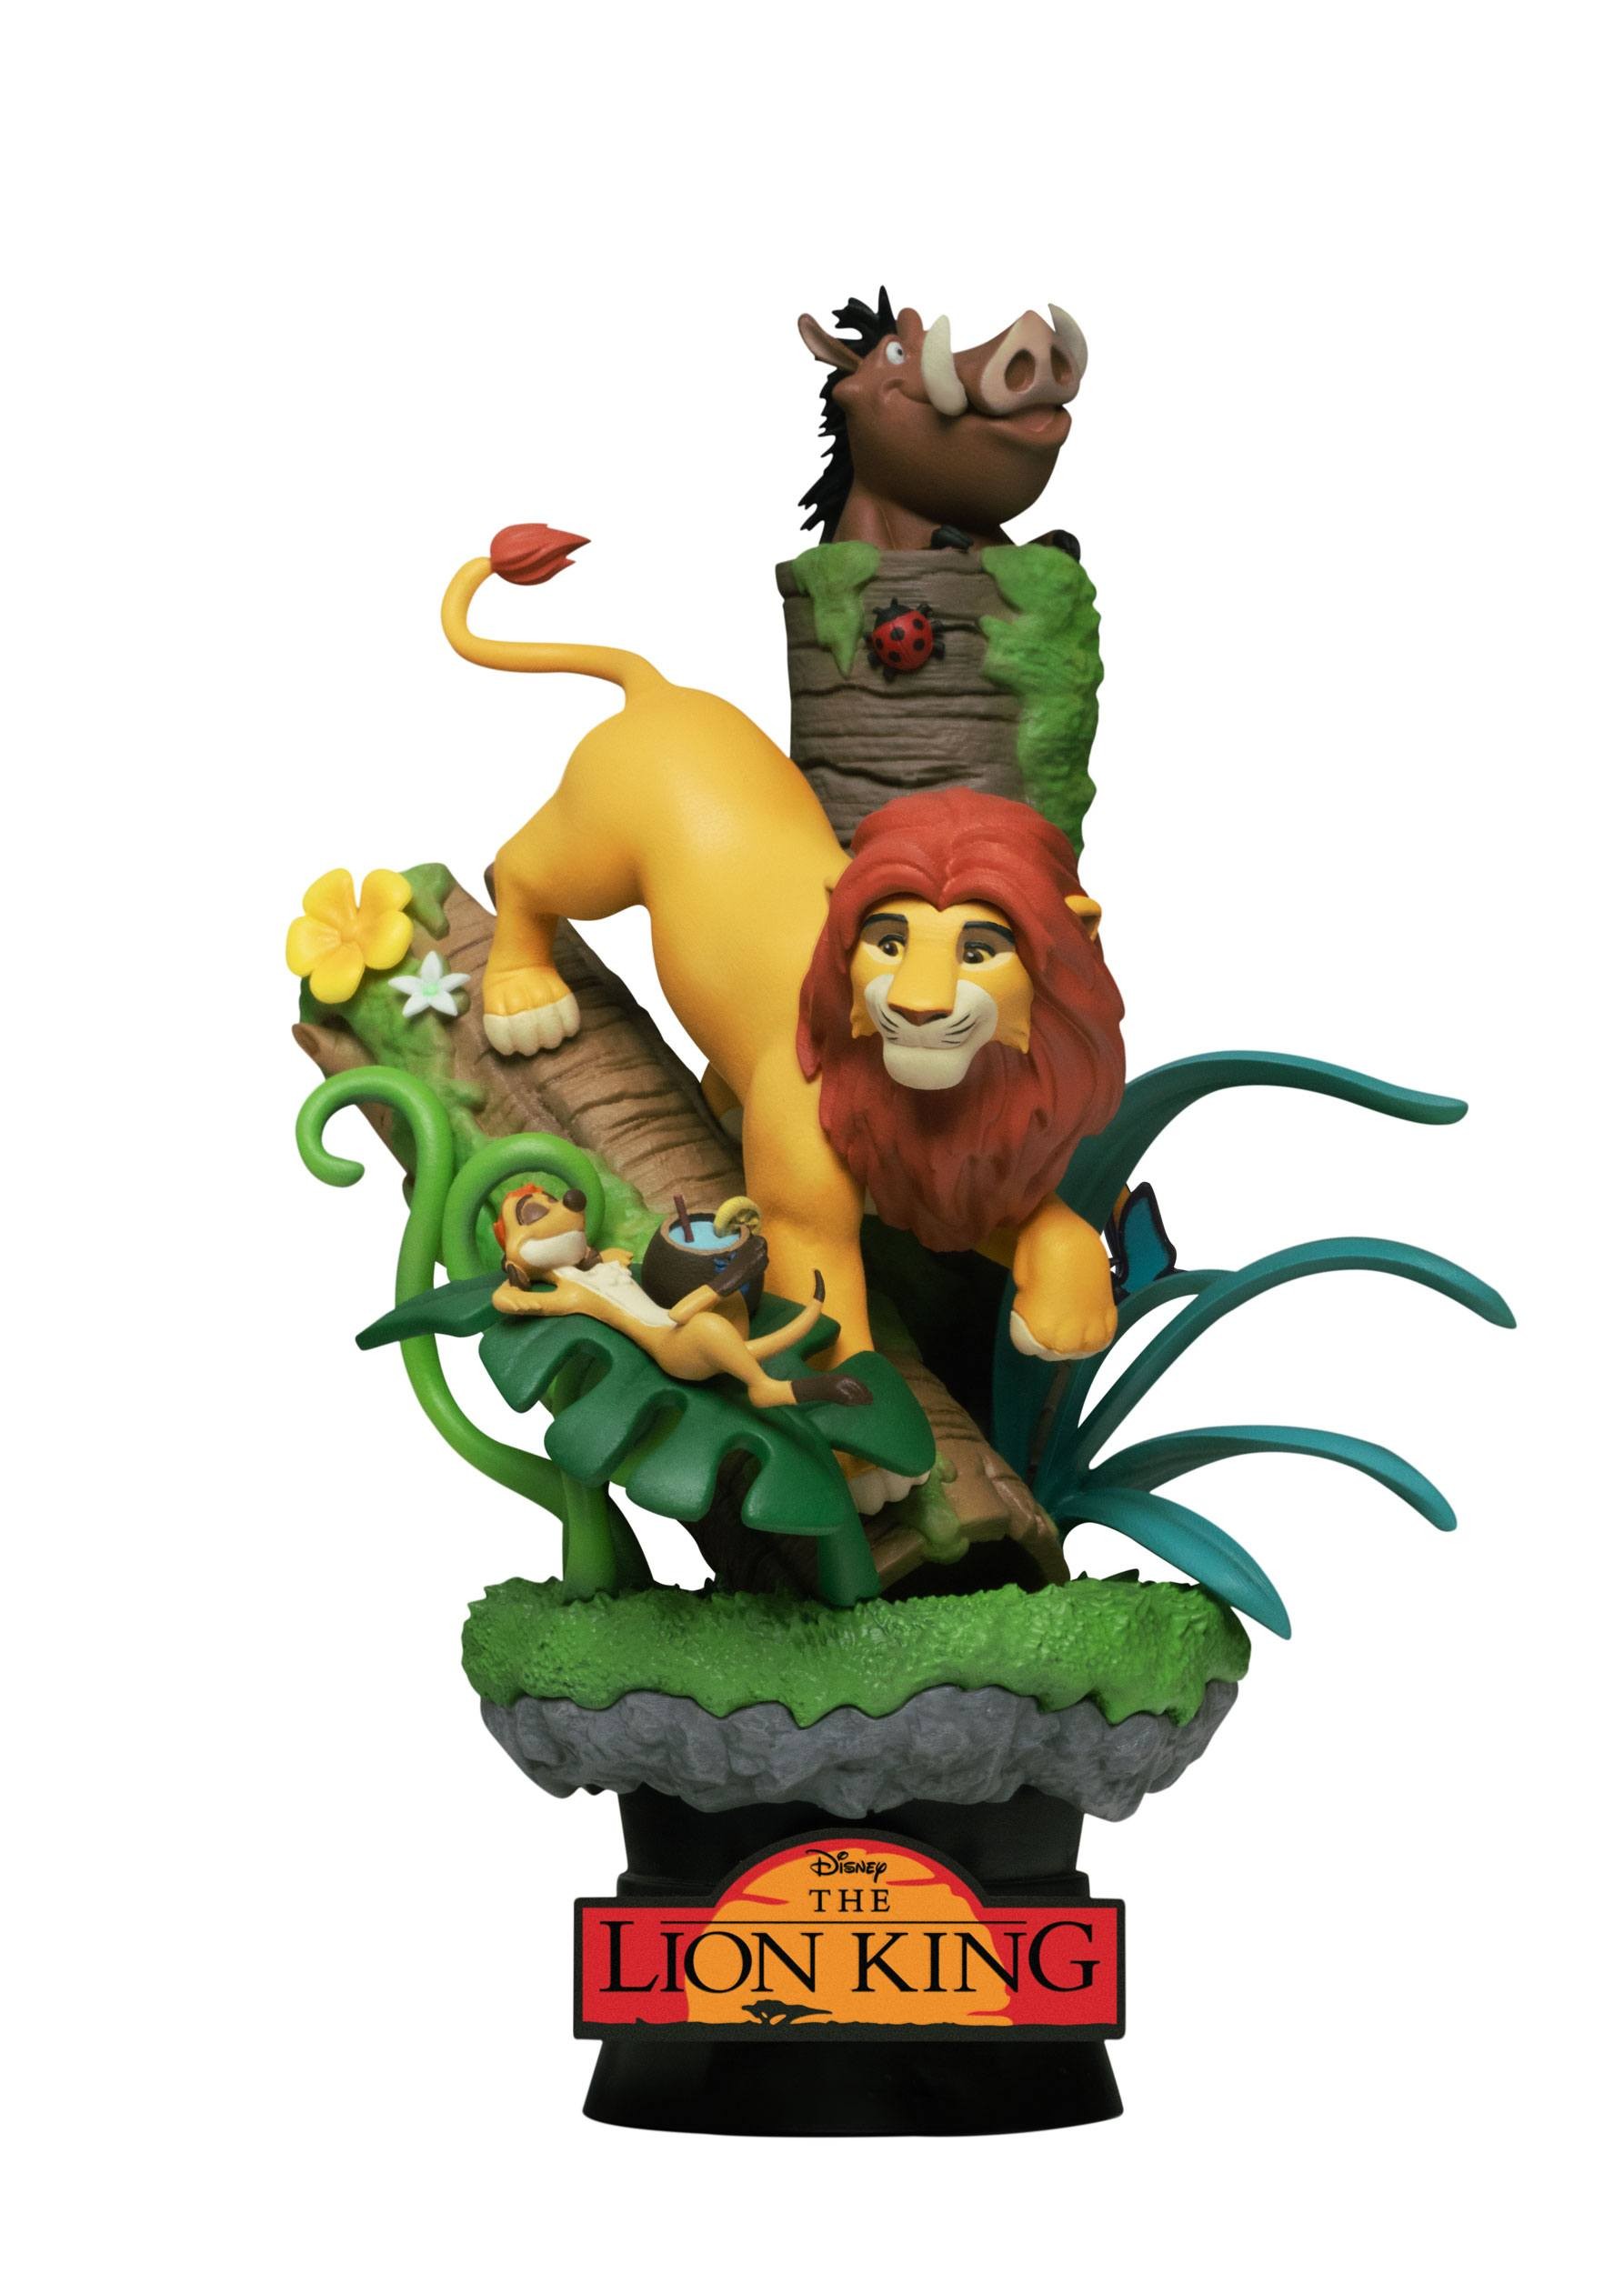 Lot figurines Disney Le Roi Lion figure set king - Disney